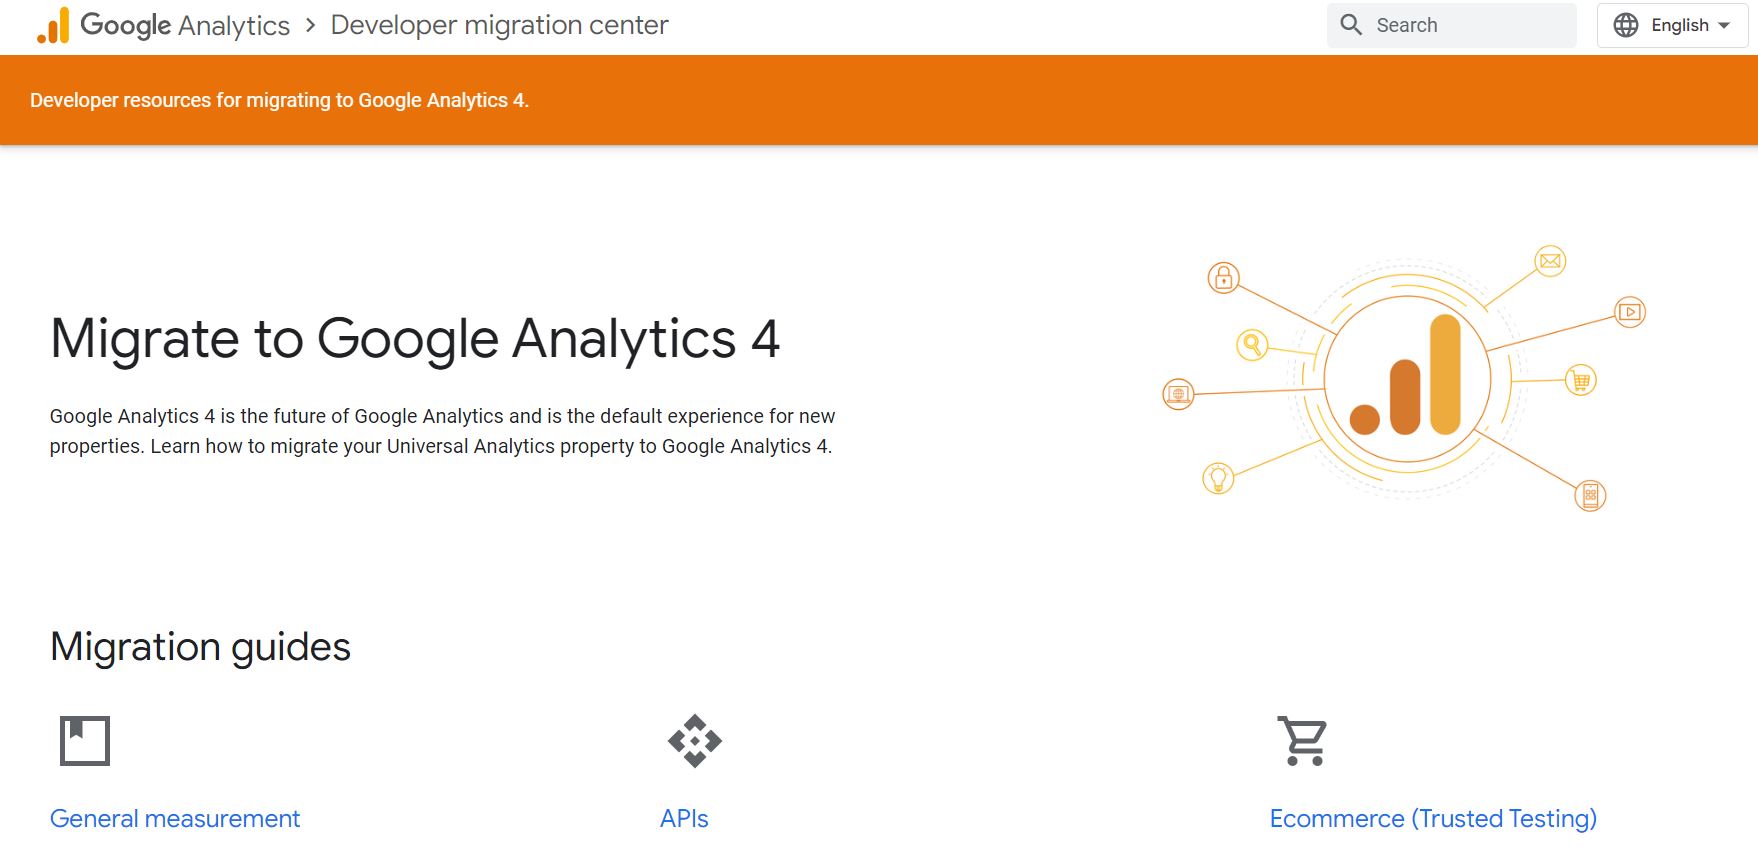 Developer migration center of Google Analytics 4